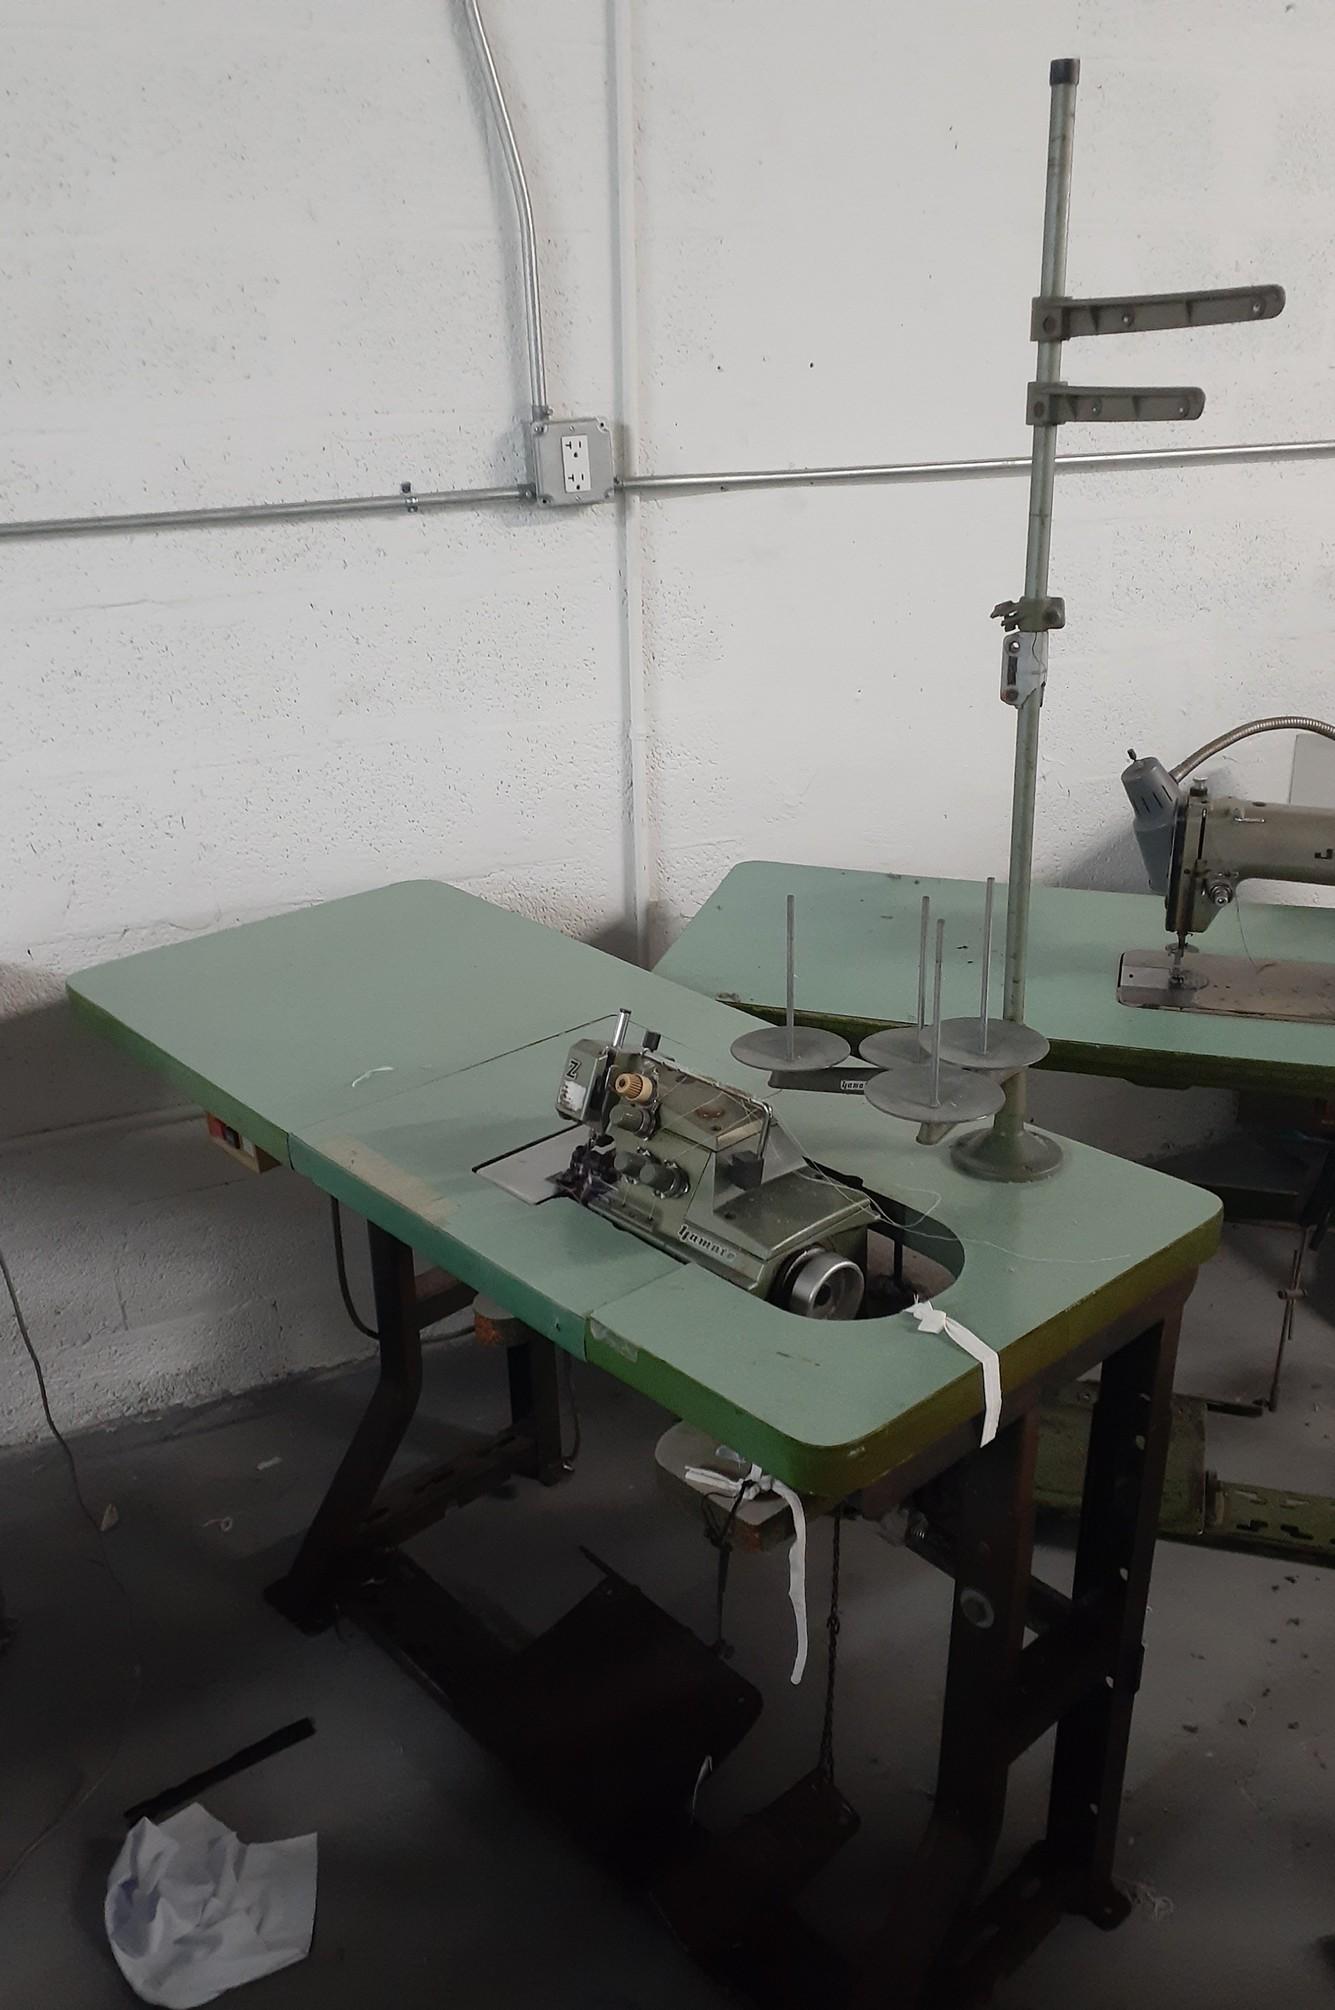 Yamato Industrial Sewing machine